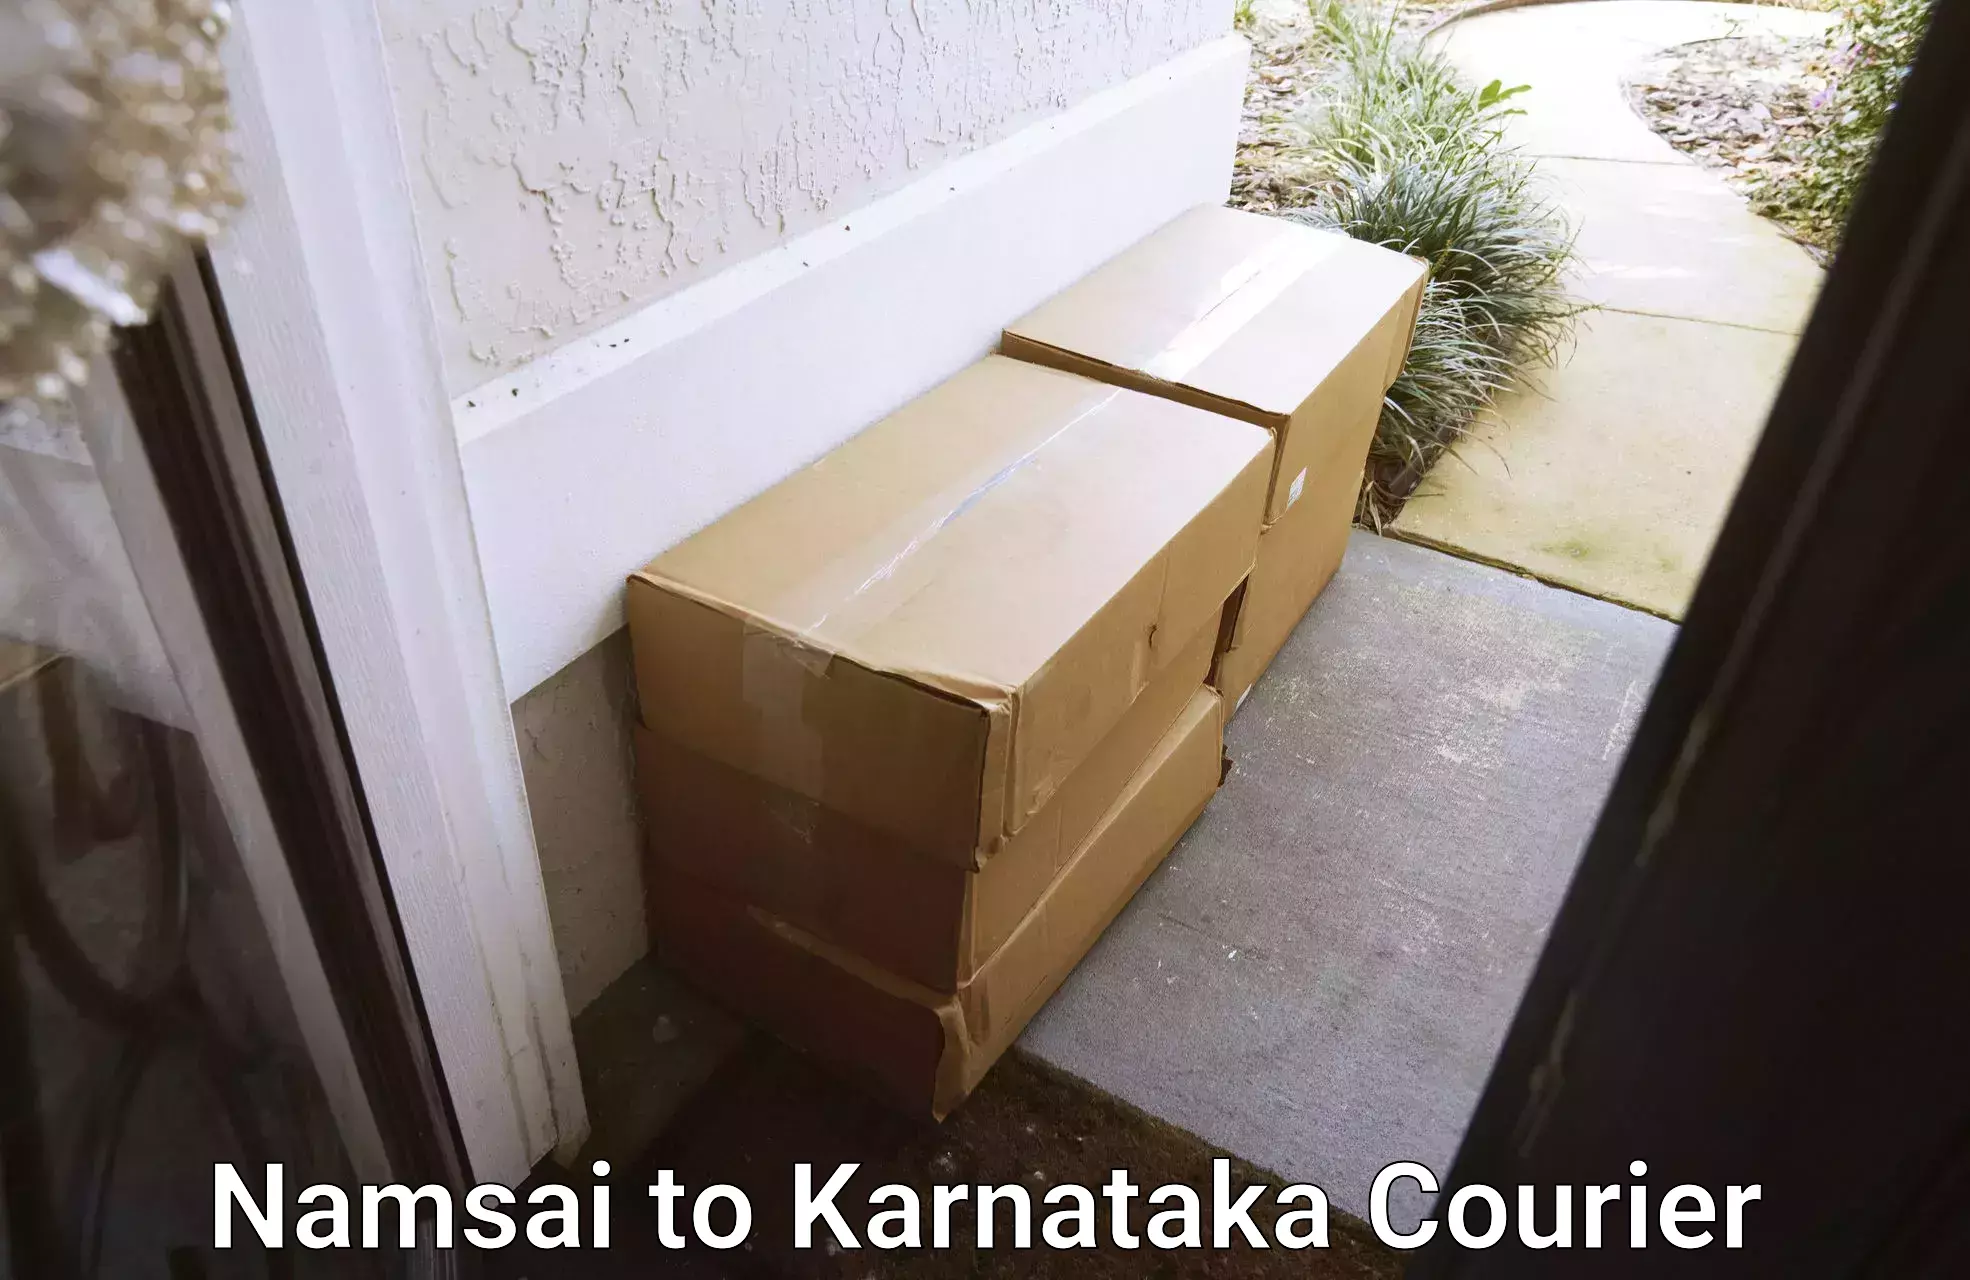 Courier service innovation Namsai to Bagepalli